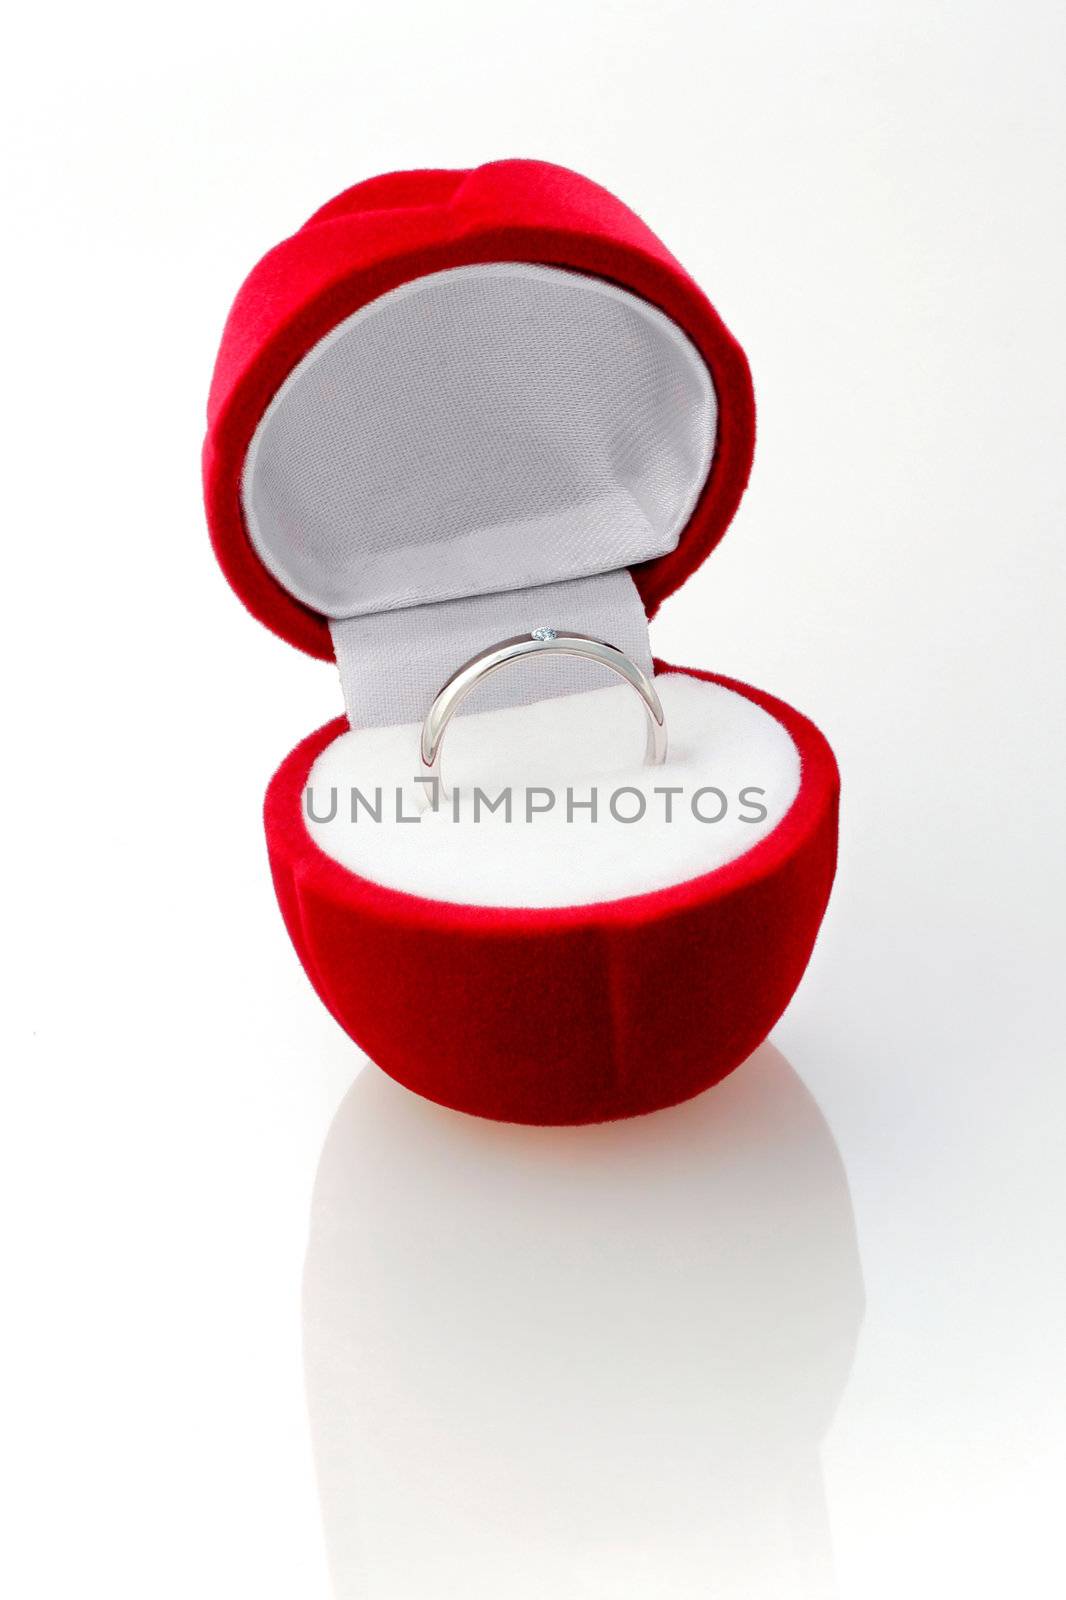 Diamond ring in the red box. by igor_stramyk